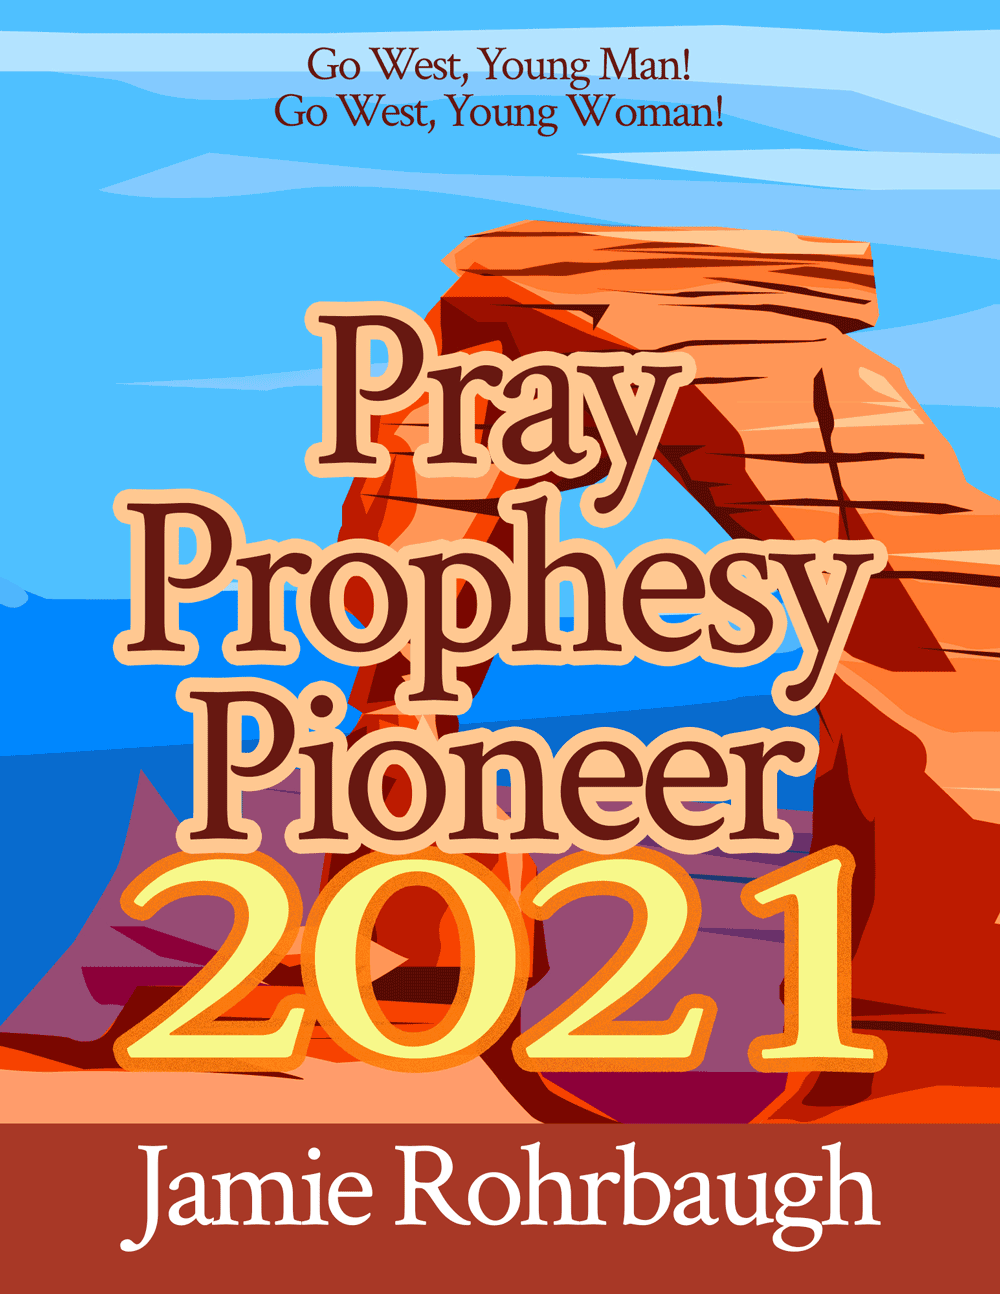 2021 prophetic digest: Pray, Prophesy, Pioneer 2021 by Jamie Rohrbaugh | FromHisPresence.com